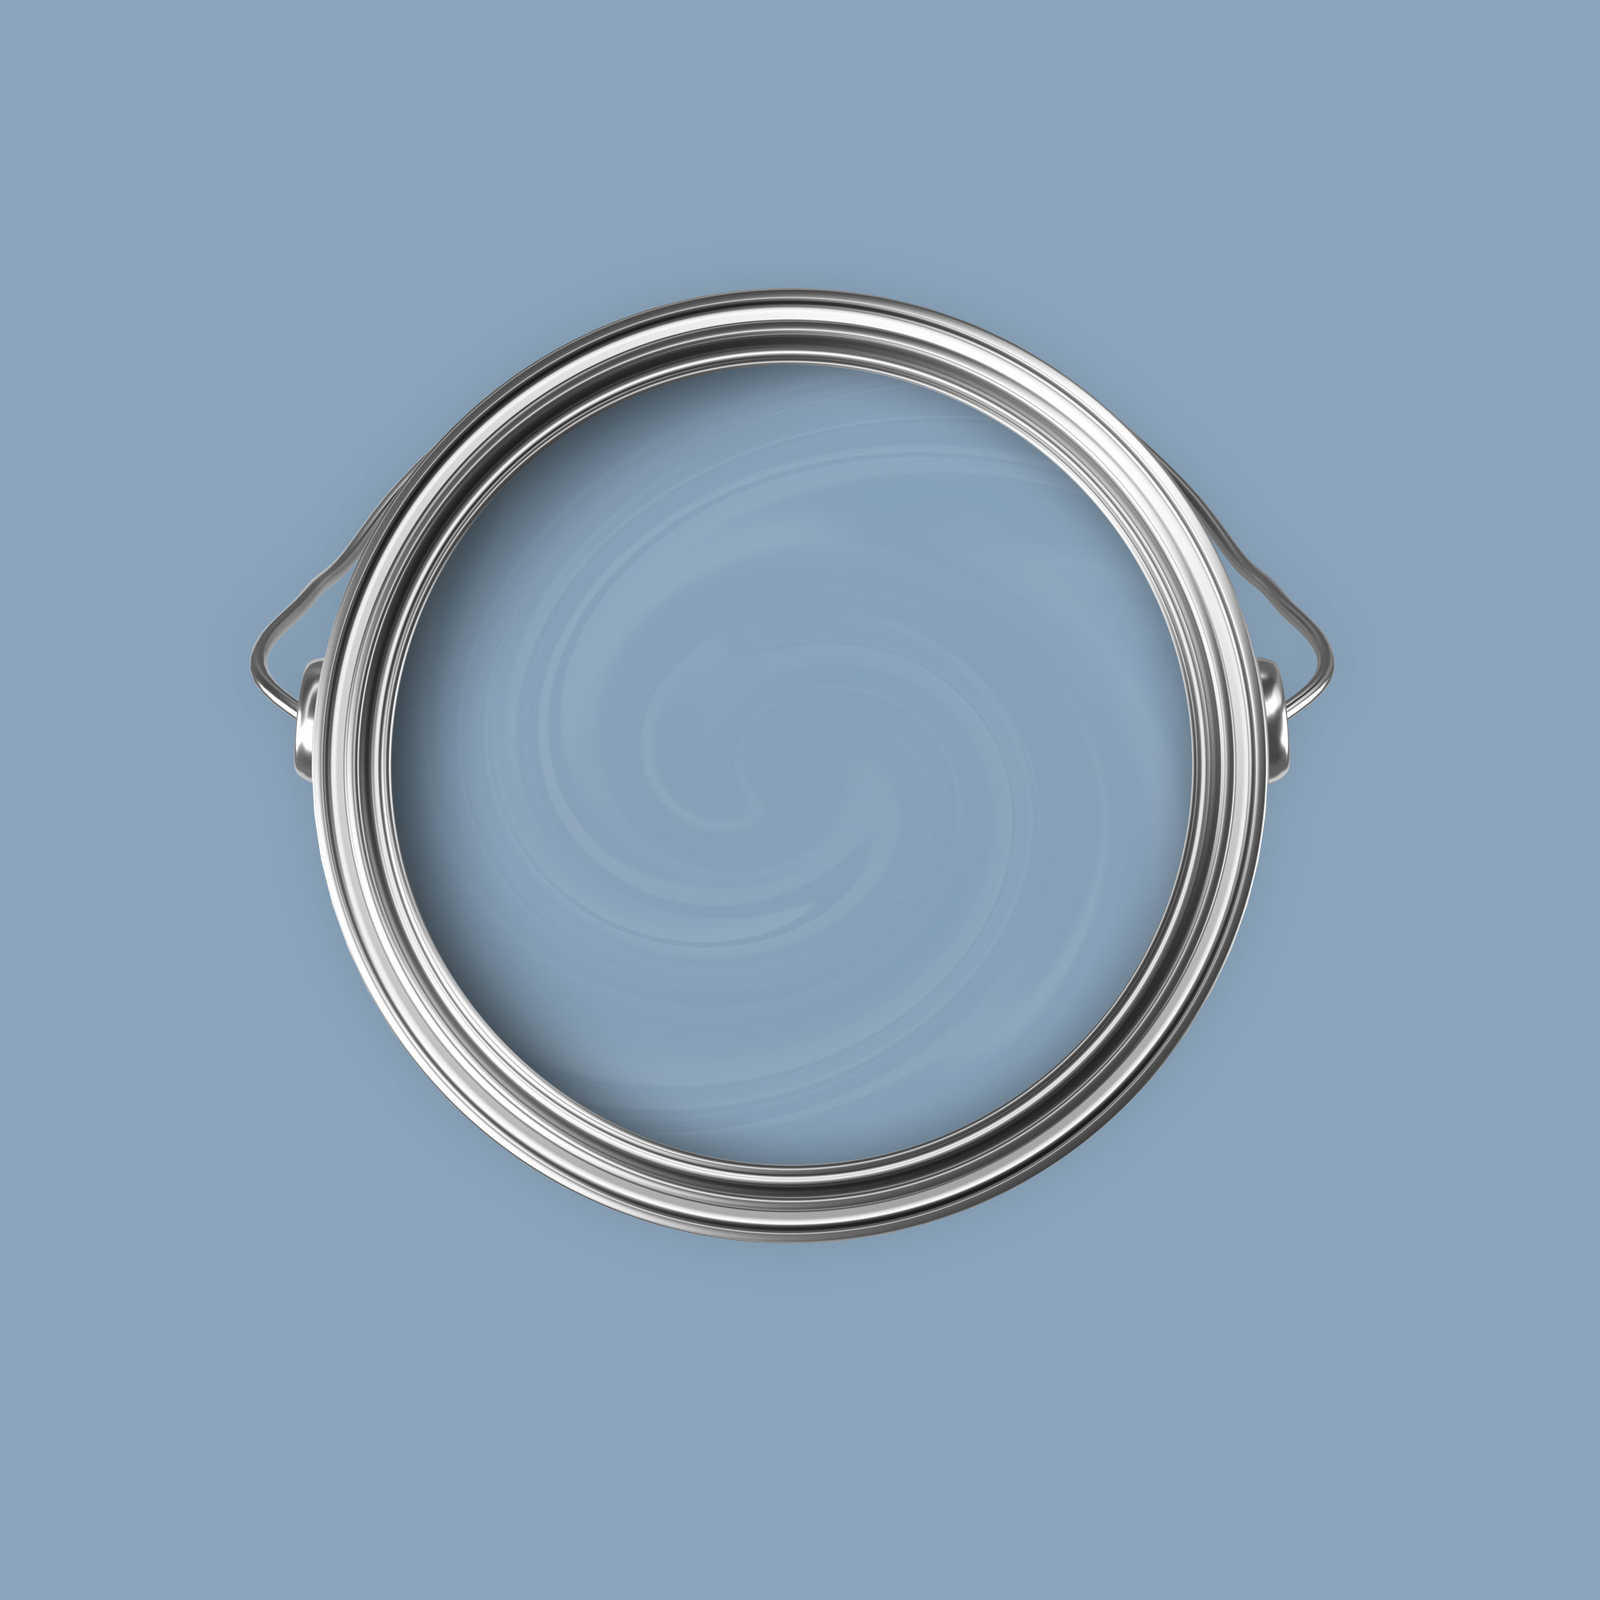             Premium Muurverf Balanced Nordic Blue »Blissful Blue« NW305 – 5 liter
        